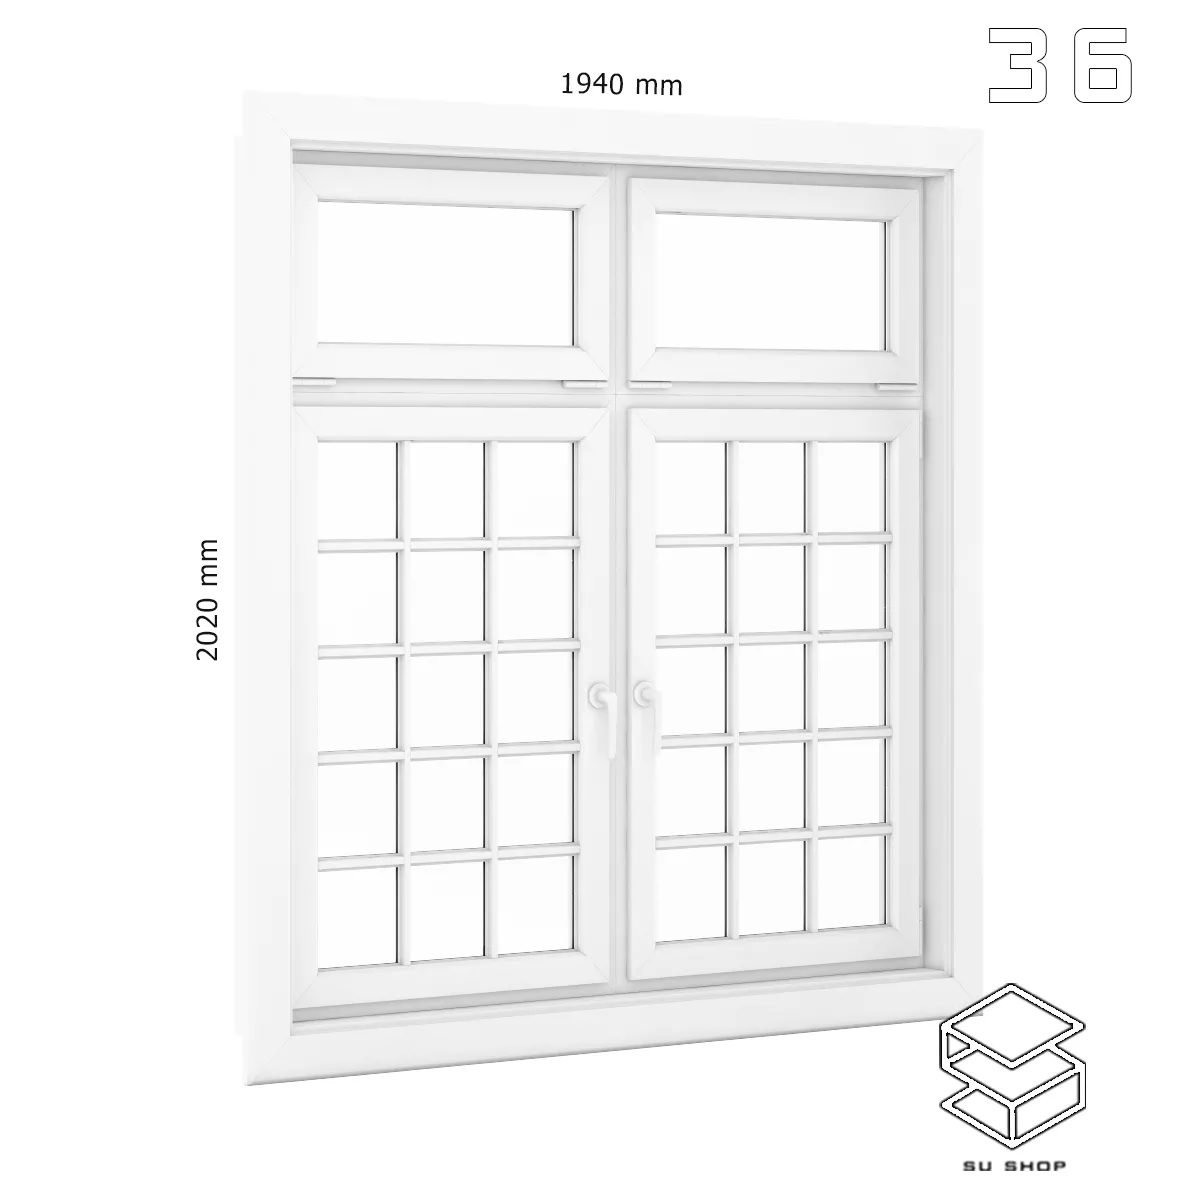 MODERN WINDOWS - SKETCHUP 3D MODEL - VRAY OR ENSCAPE - ID16777